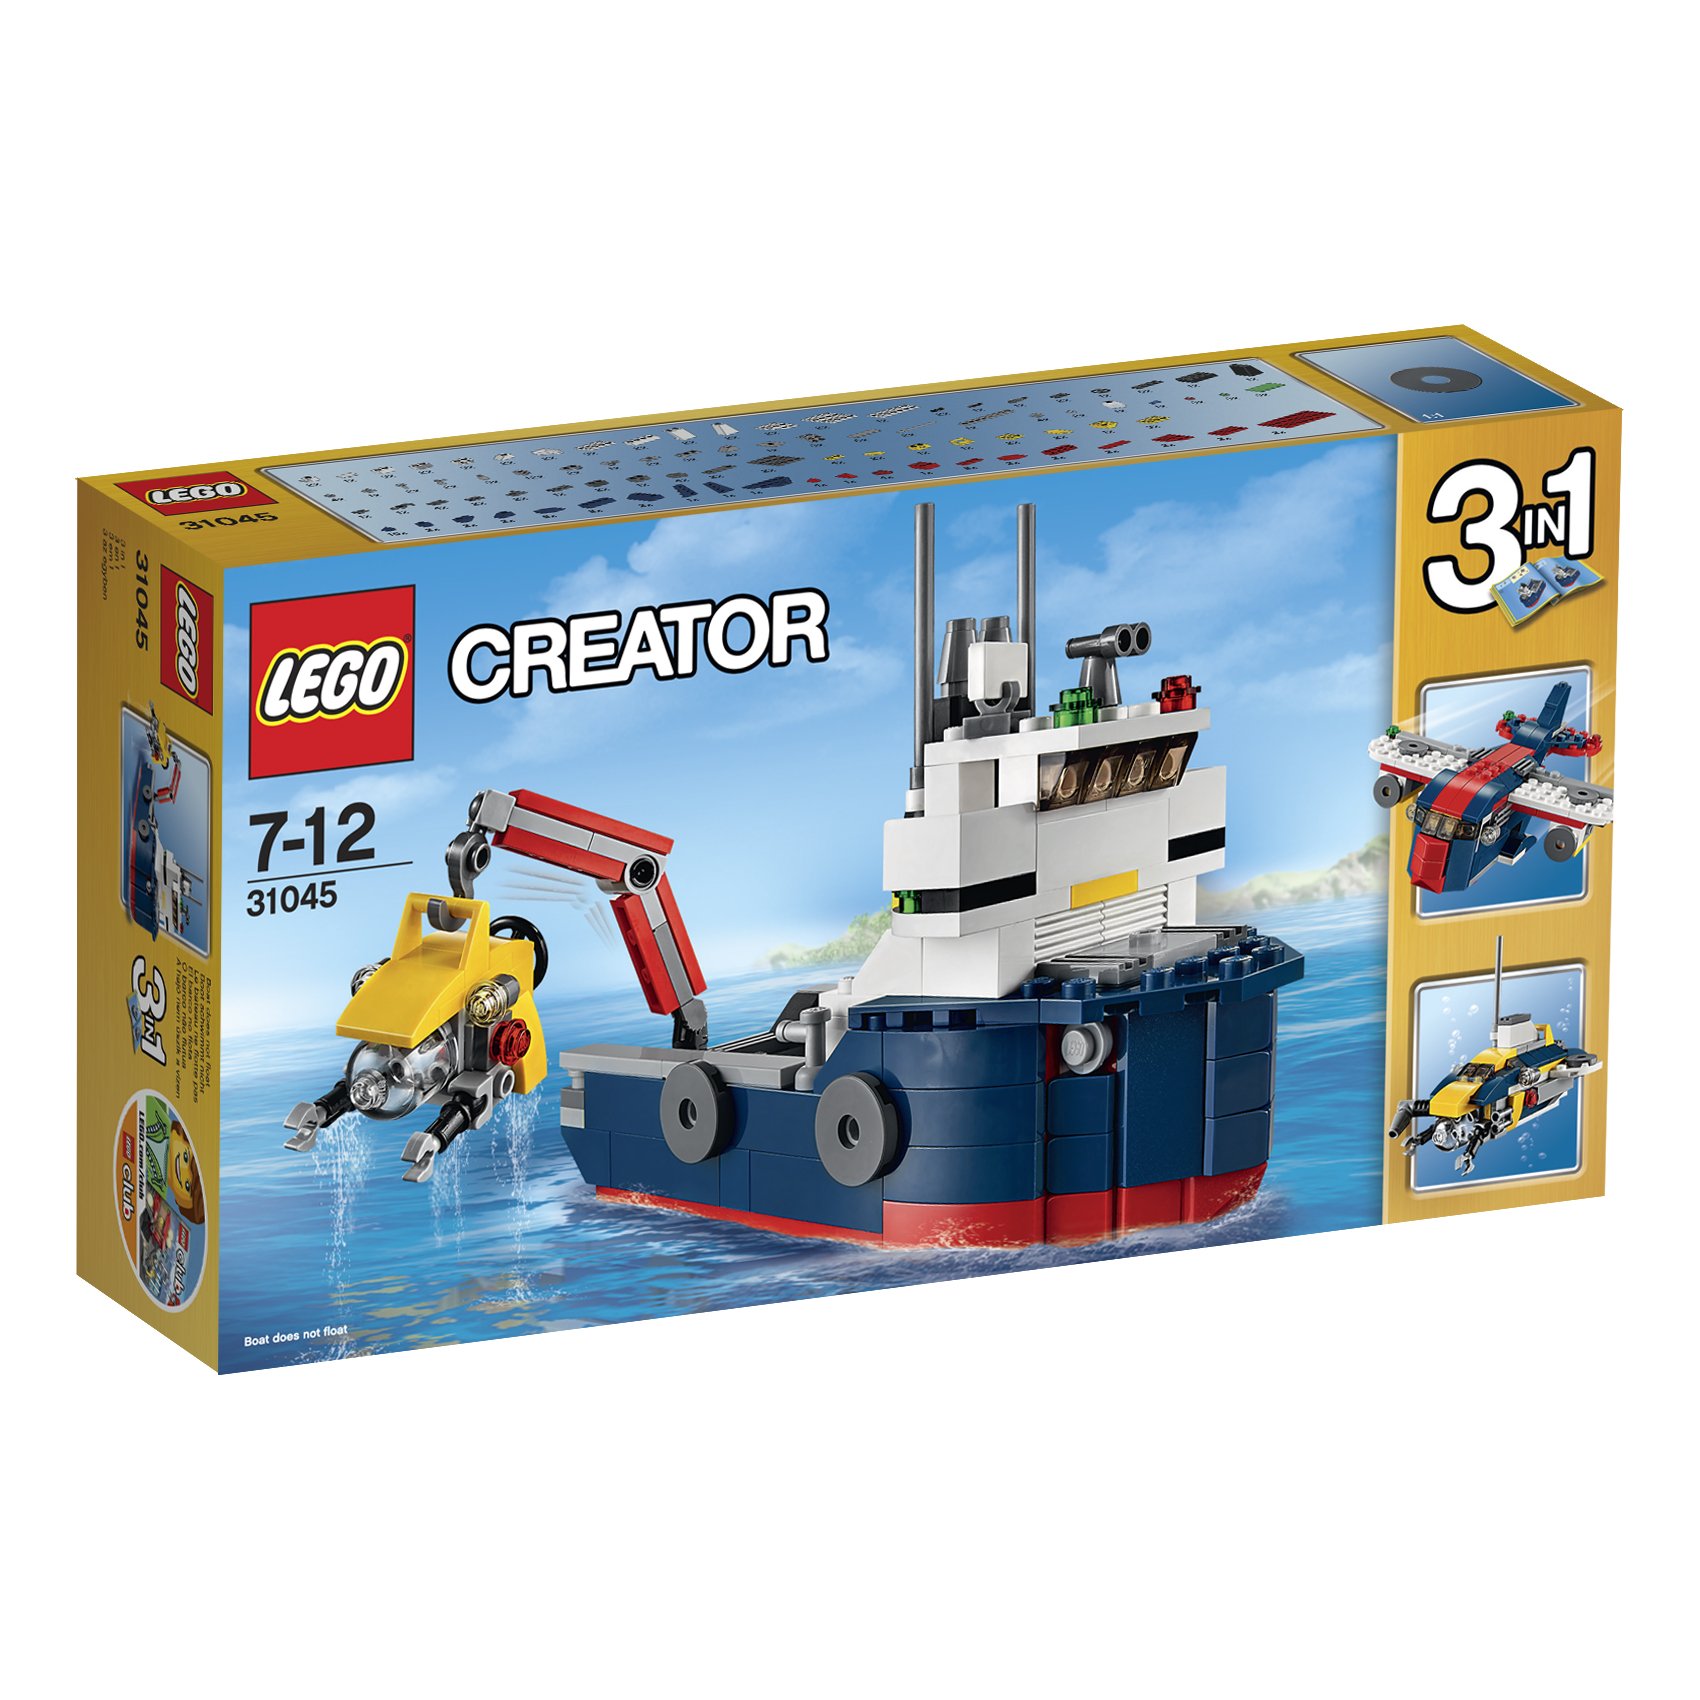 Lego Ocean Explorer Mixed